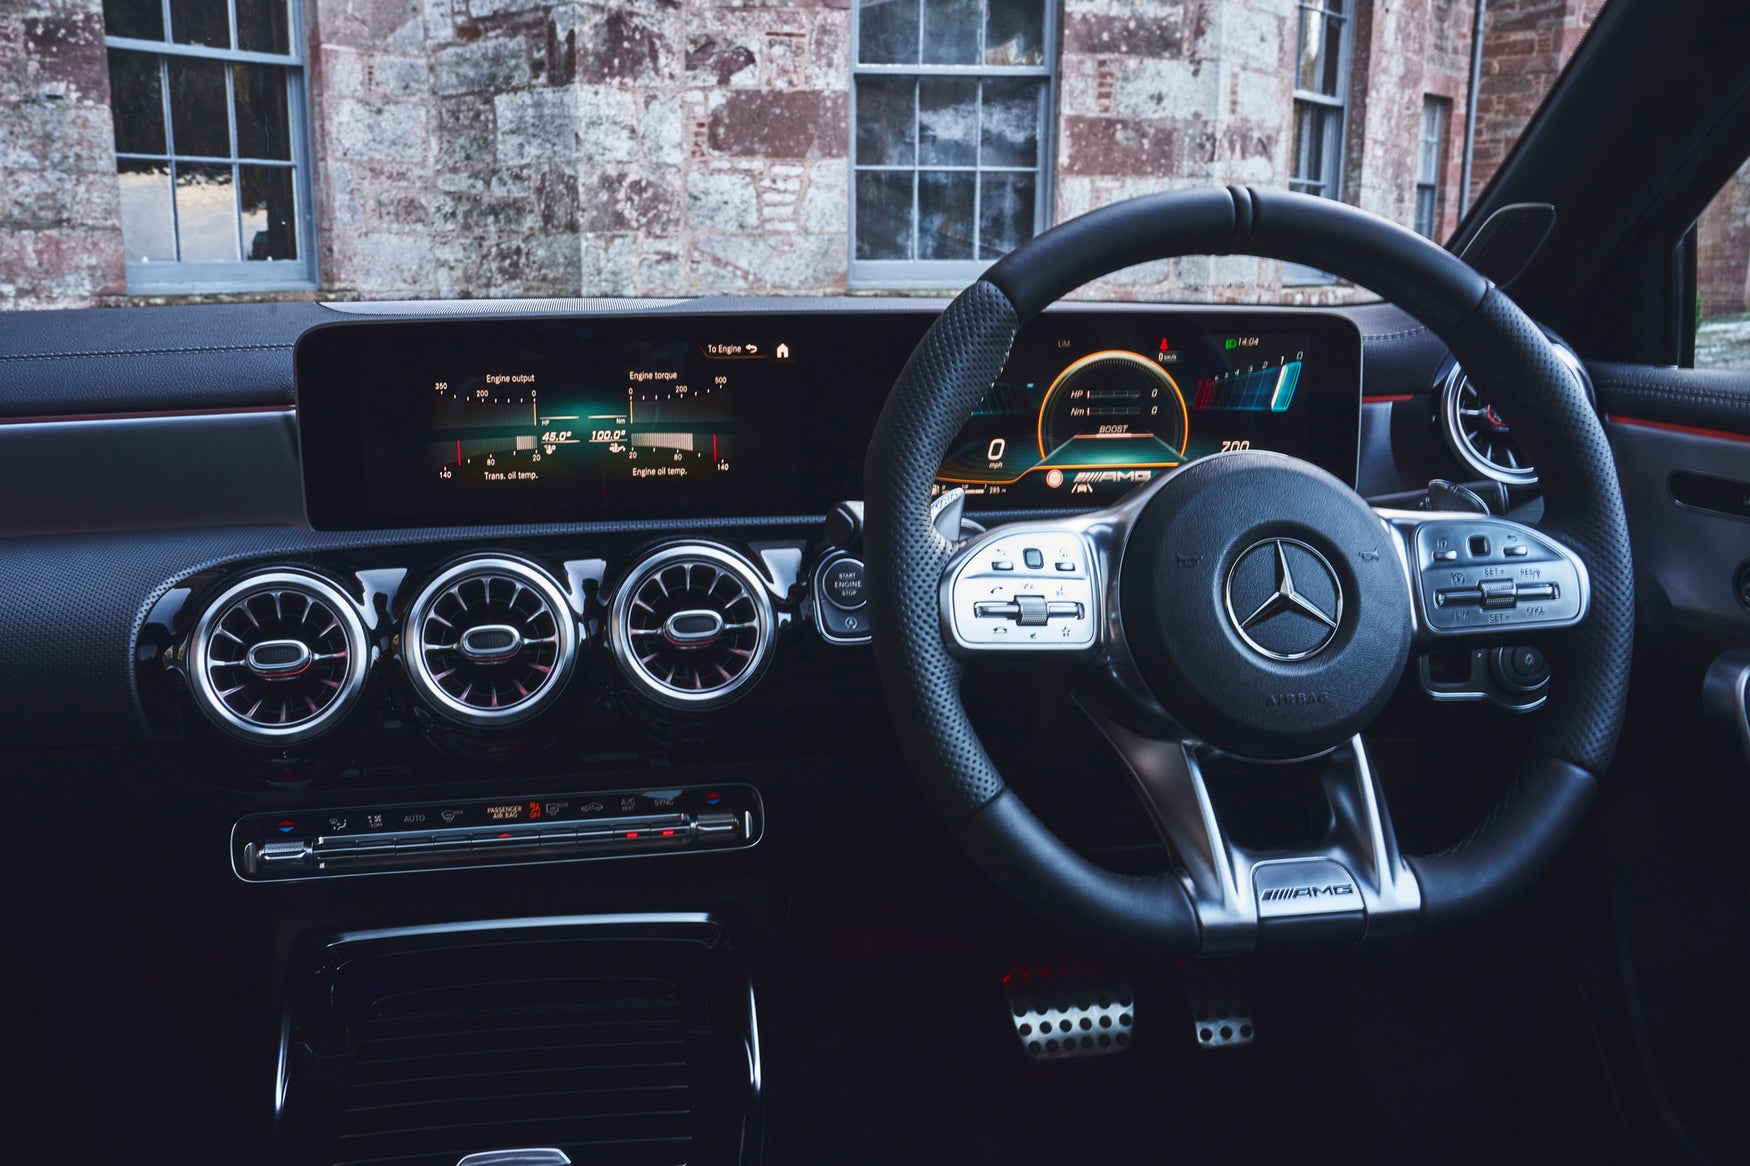 Mercedes A-Class interior dash